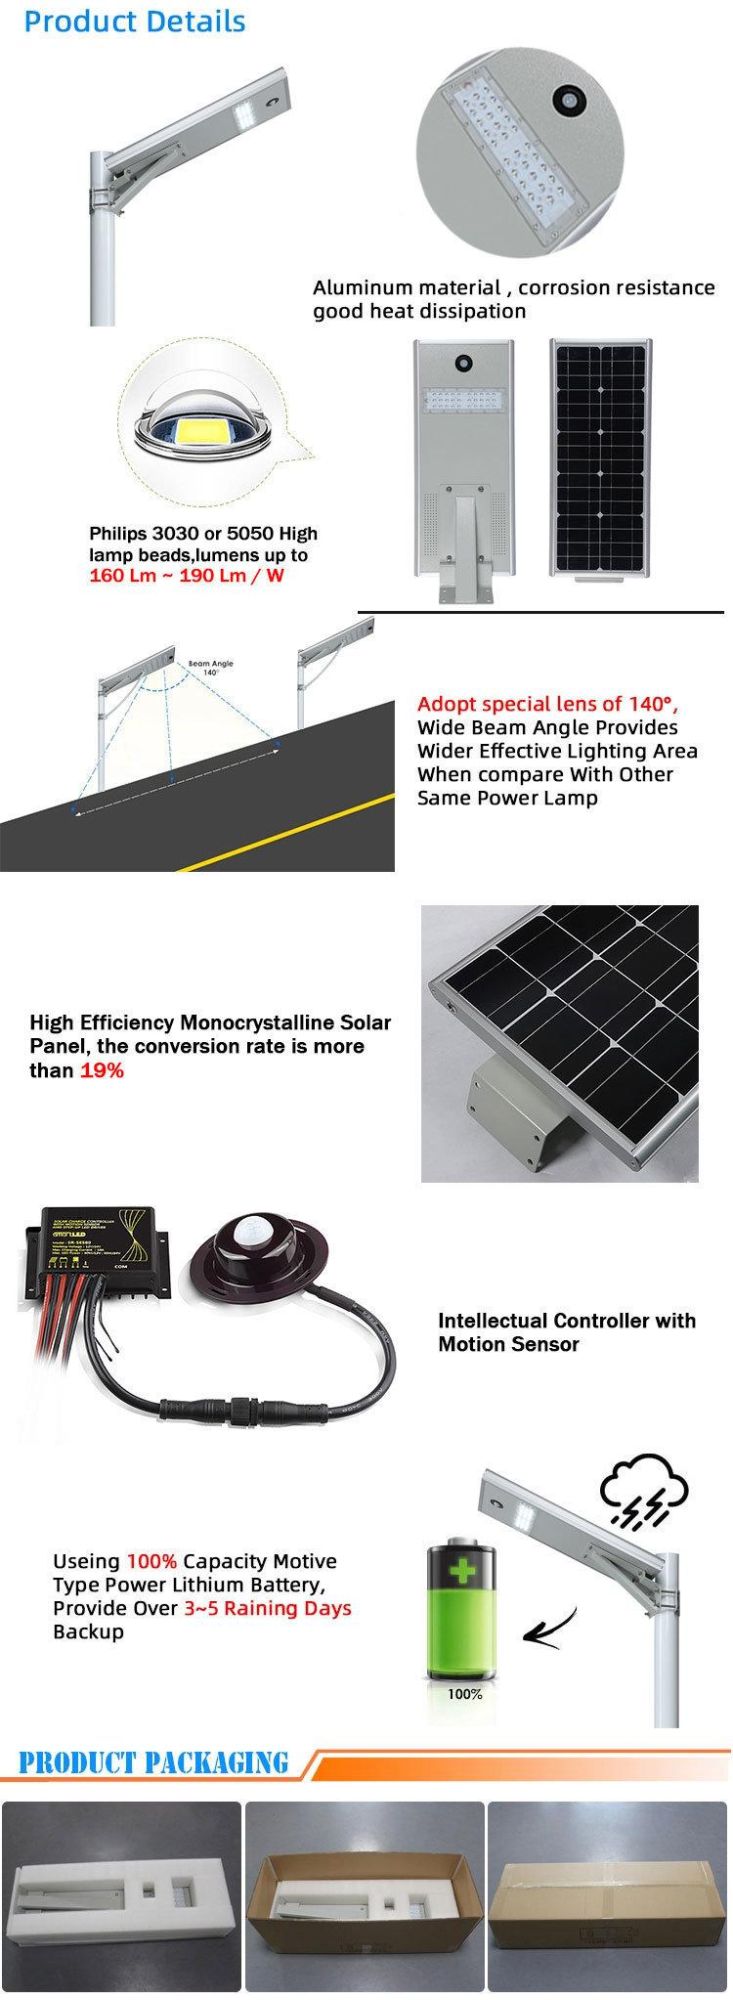 High Lumen Motion Sensor IP65 Waterproof Lamp Outdoor Solar Light Smart All in One Integrated 15W LED Solar Street Light